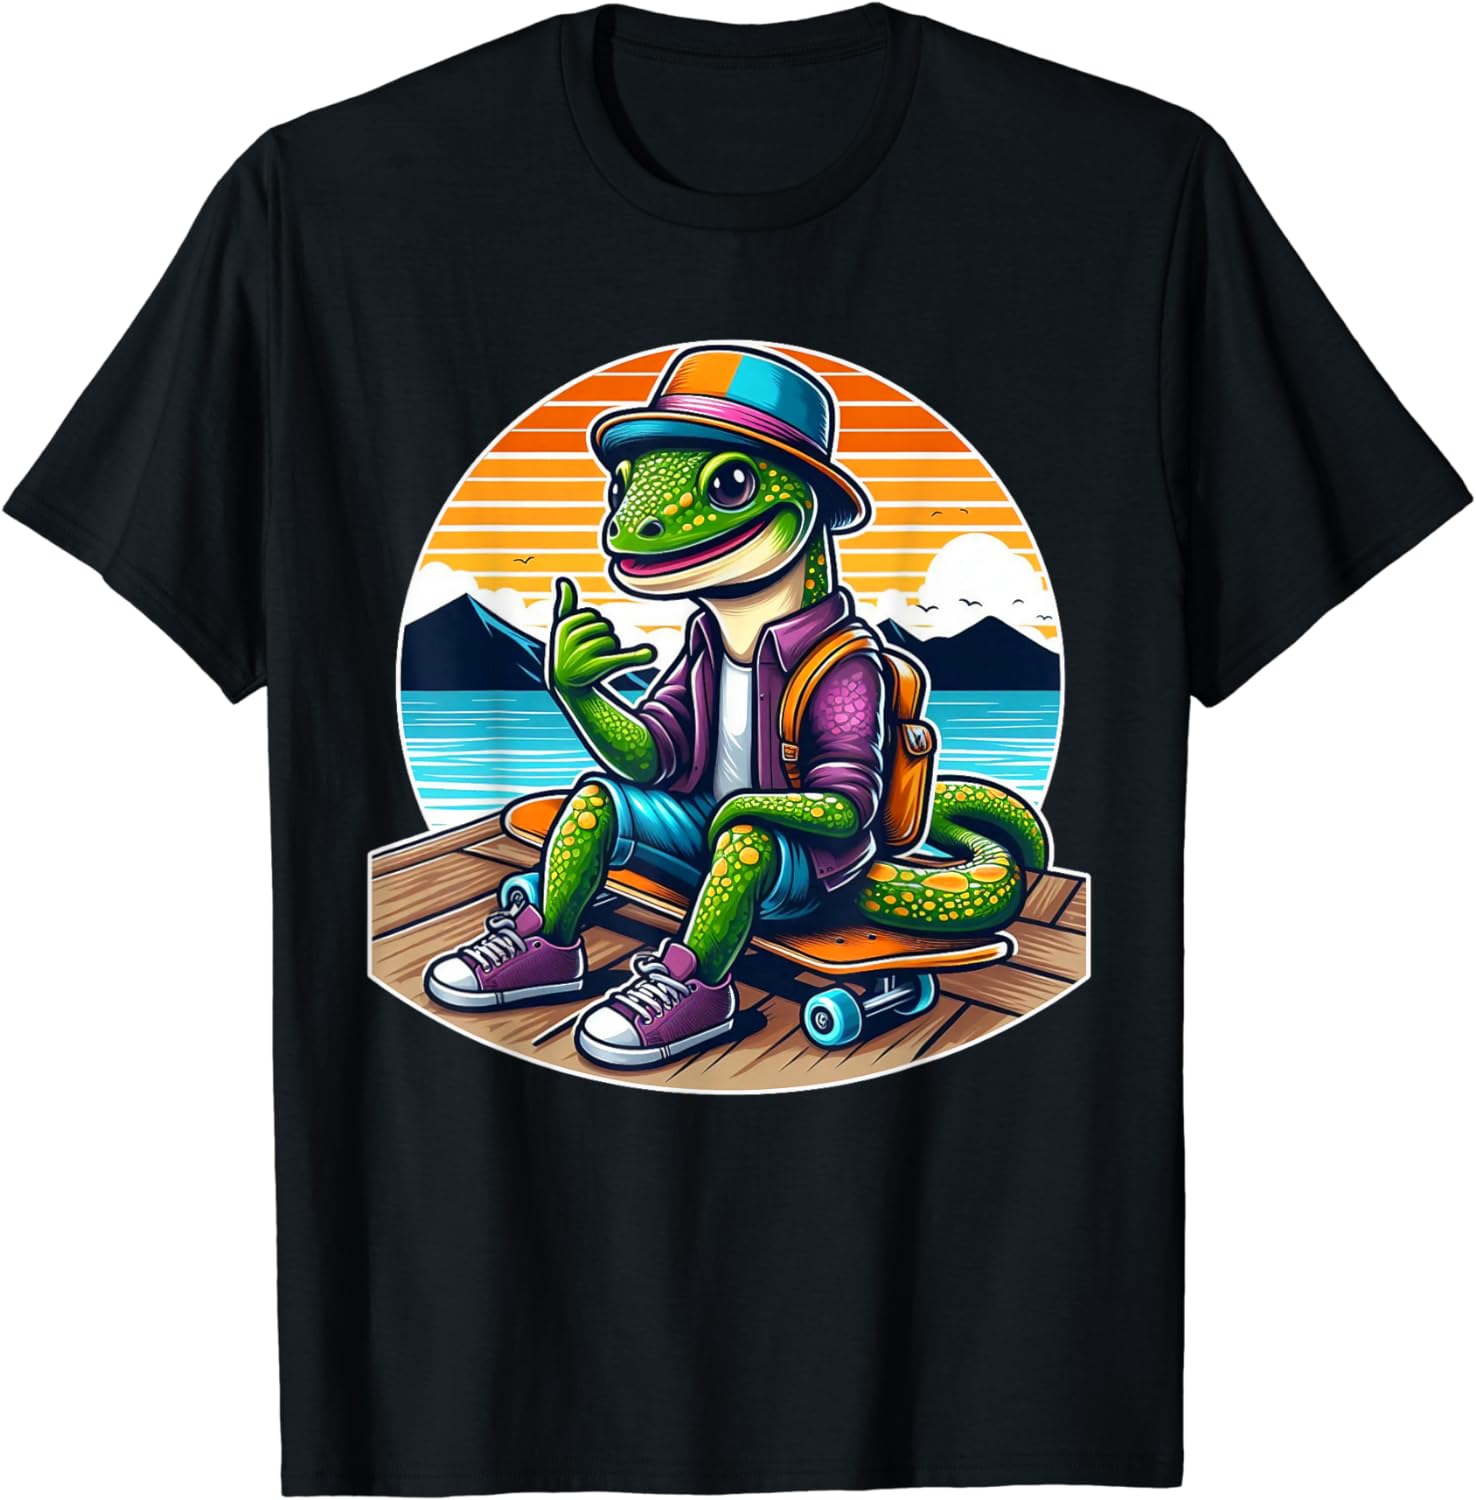 Skater gecko Shirt